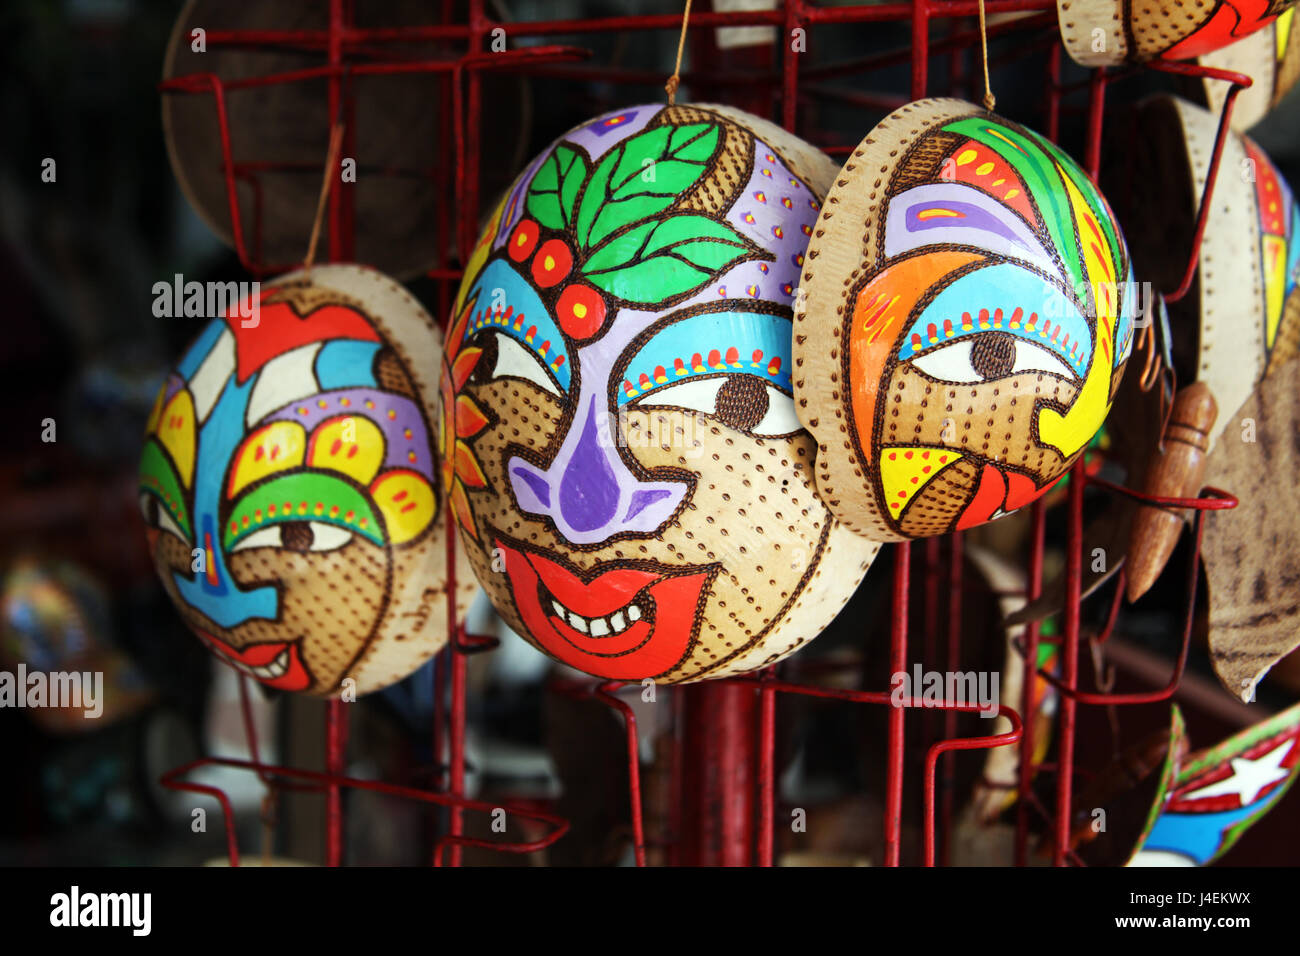 Colorful masks sold in a souvenier shop in Trinidad, Cuba. Stock Photo